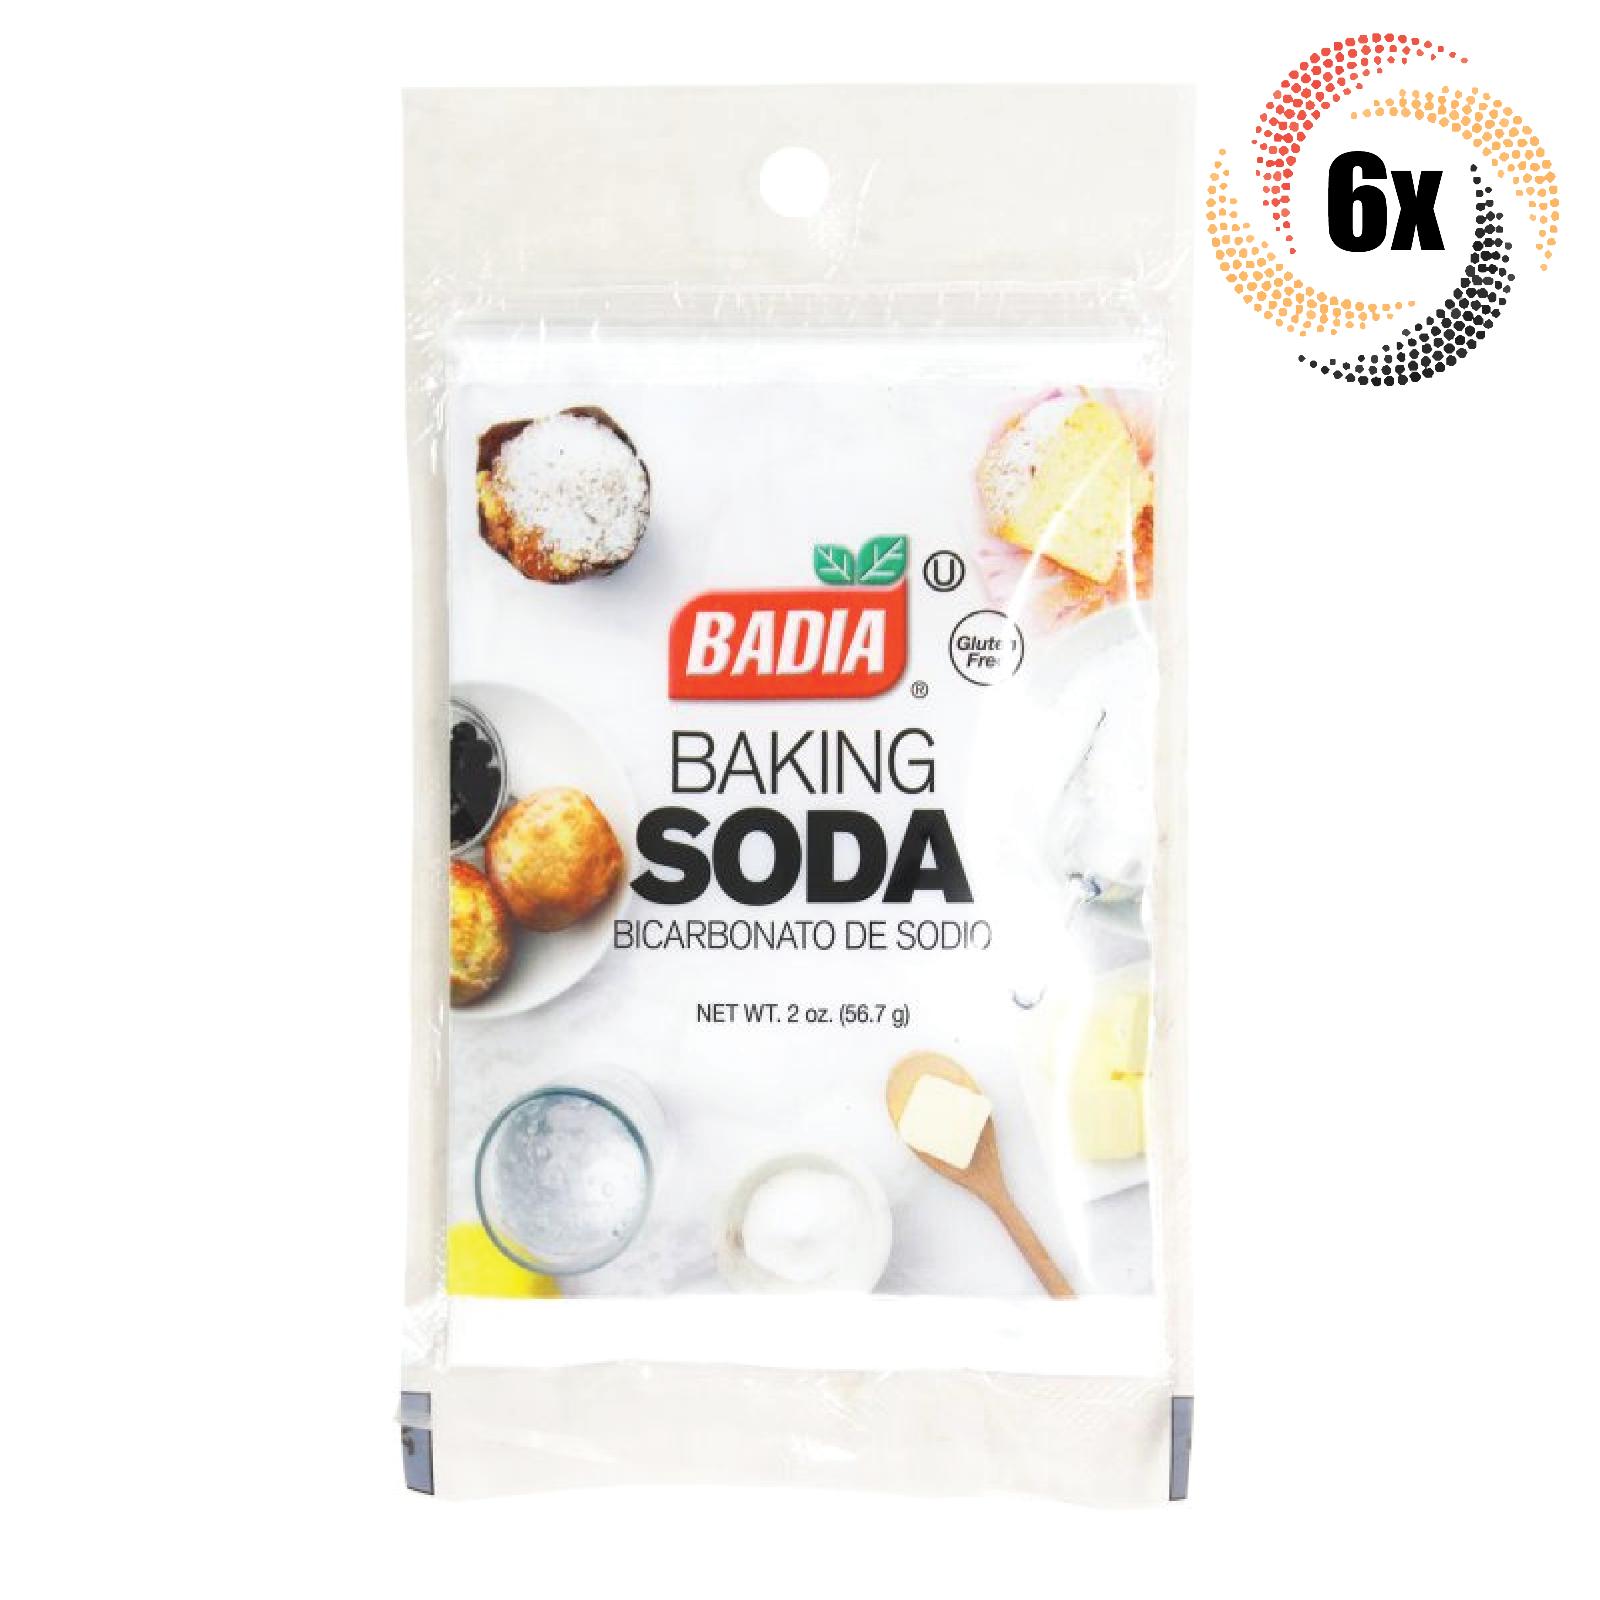 6x Bags Badia Baking Soda Bicarbonato De Sodio | 2oz | Gluten Free! - $15.48